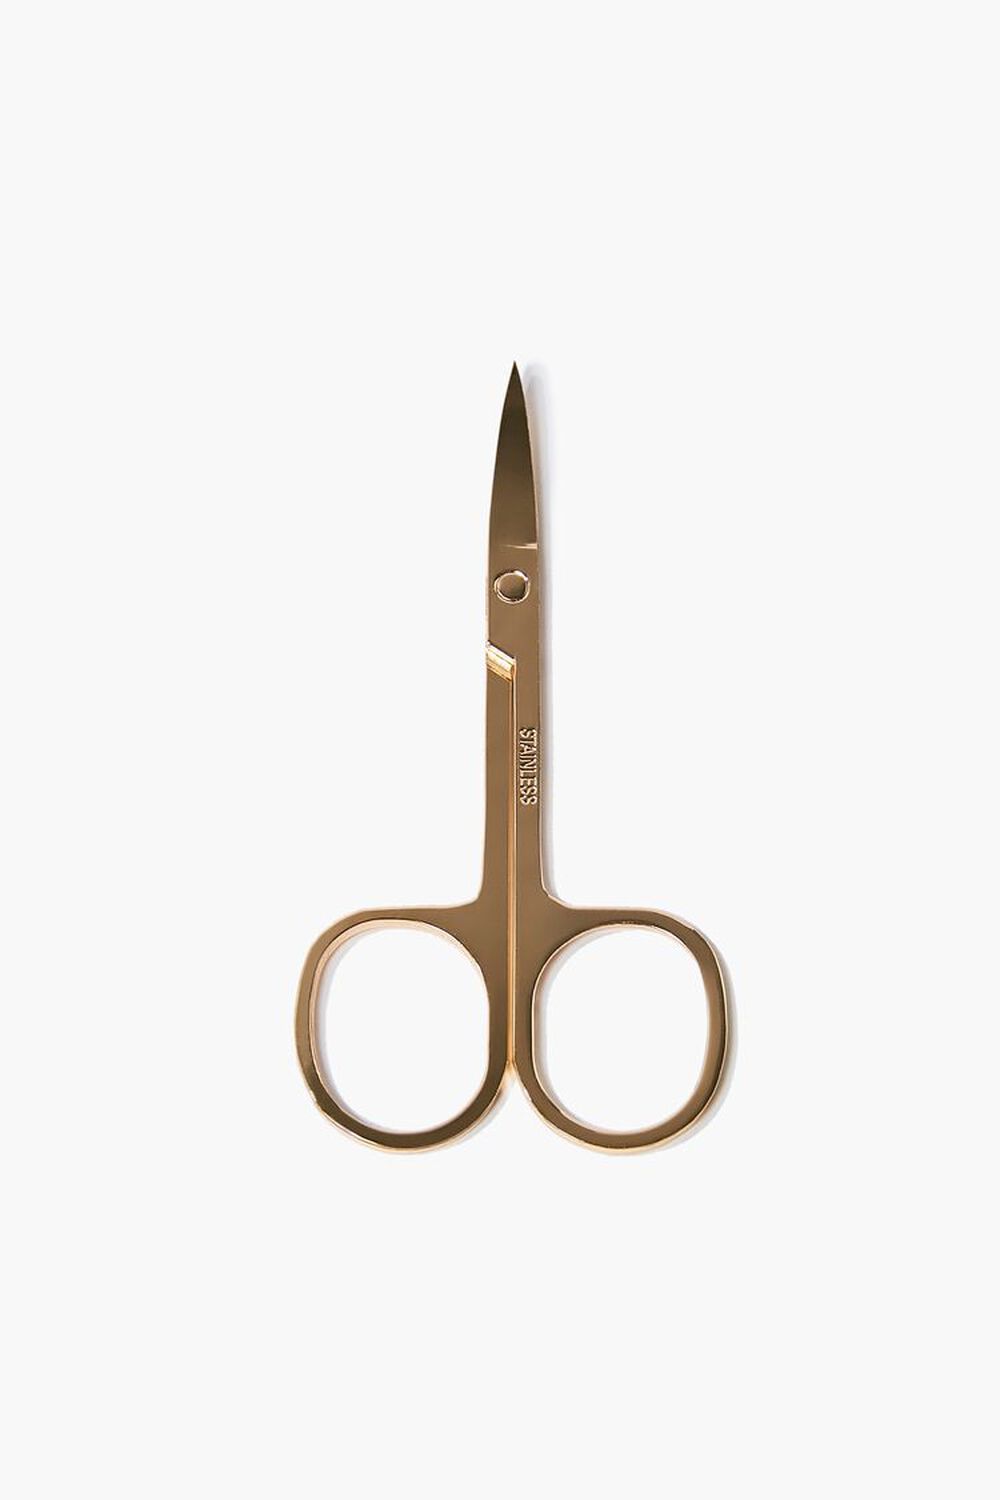 GOLD Metal Nail Scissors, image 1